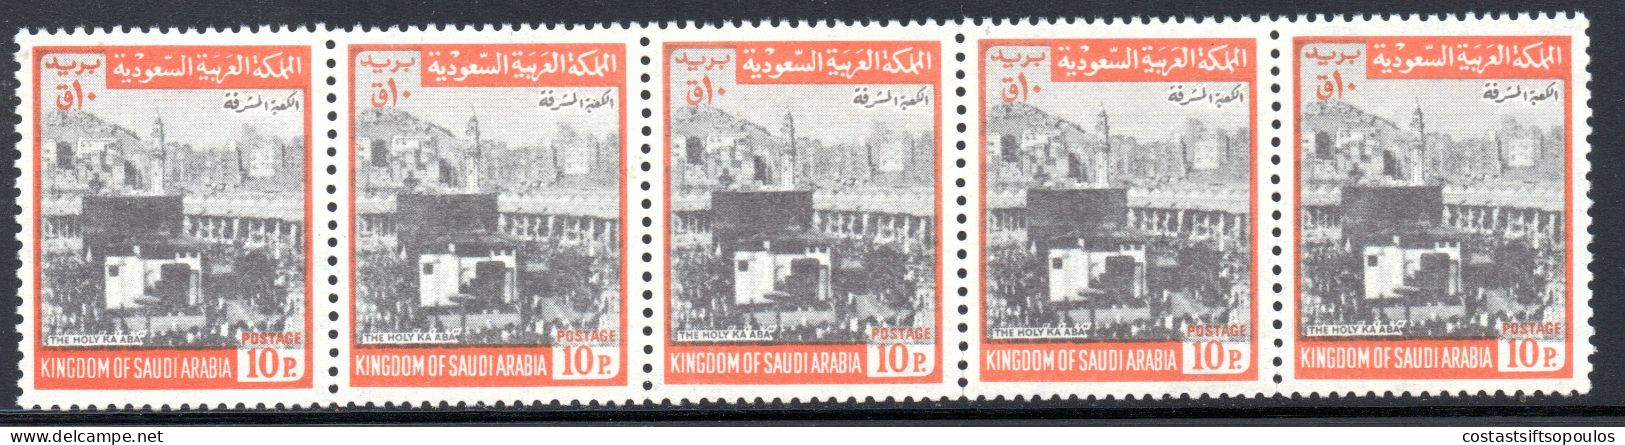 2941. SAUDI ARABIA 1969 10 P. KAABA MICH. 487 II MNH STRIP OF 5 - Arabia Saudita